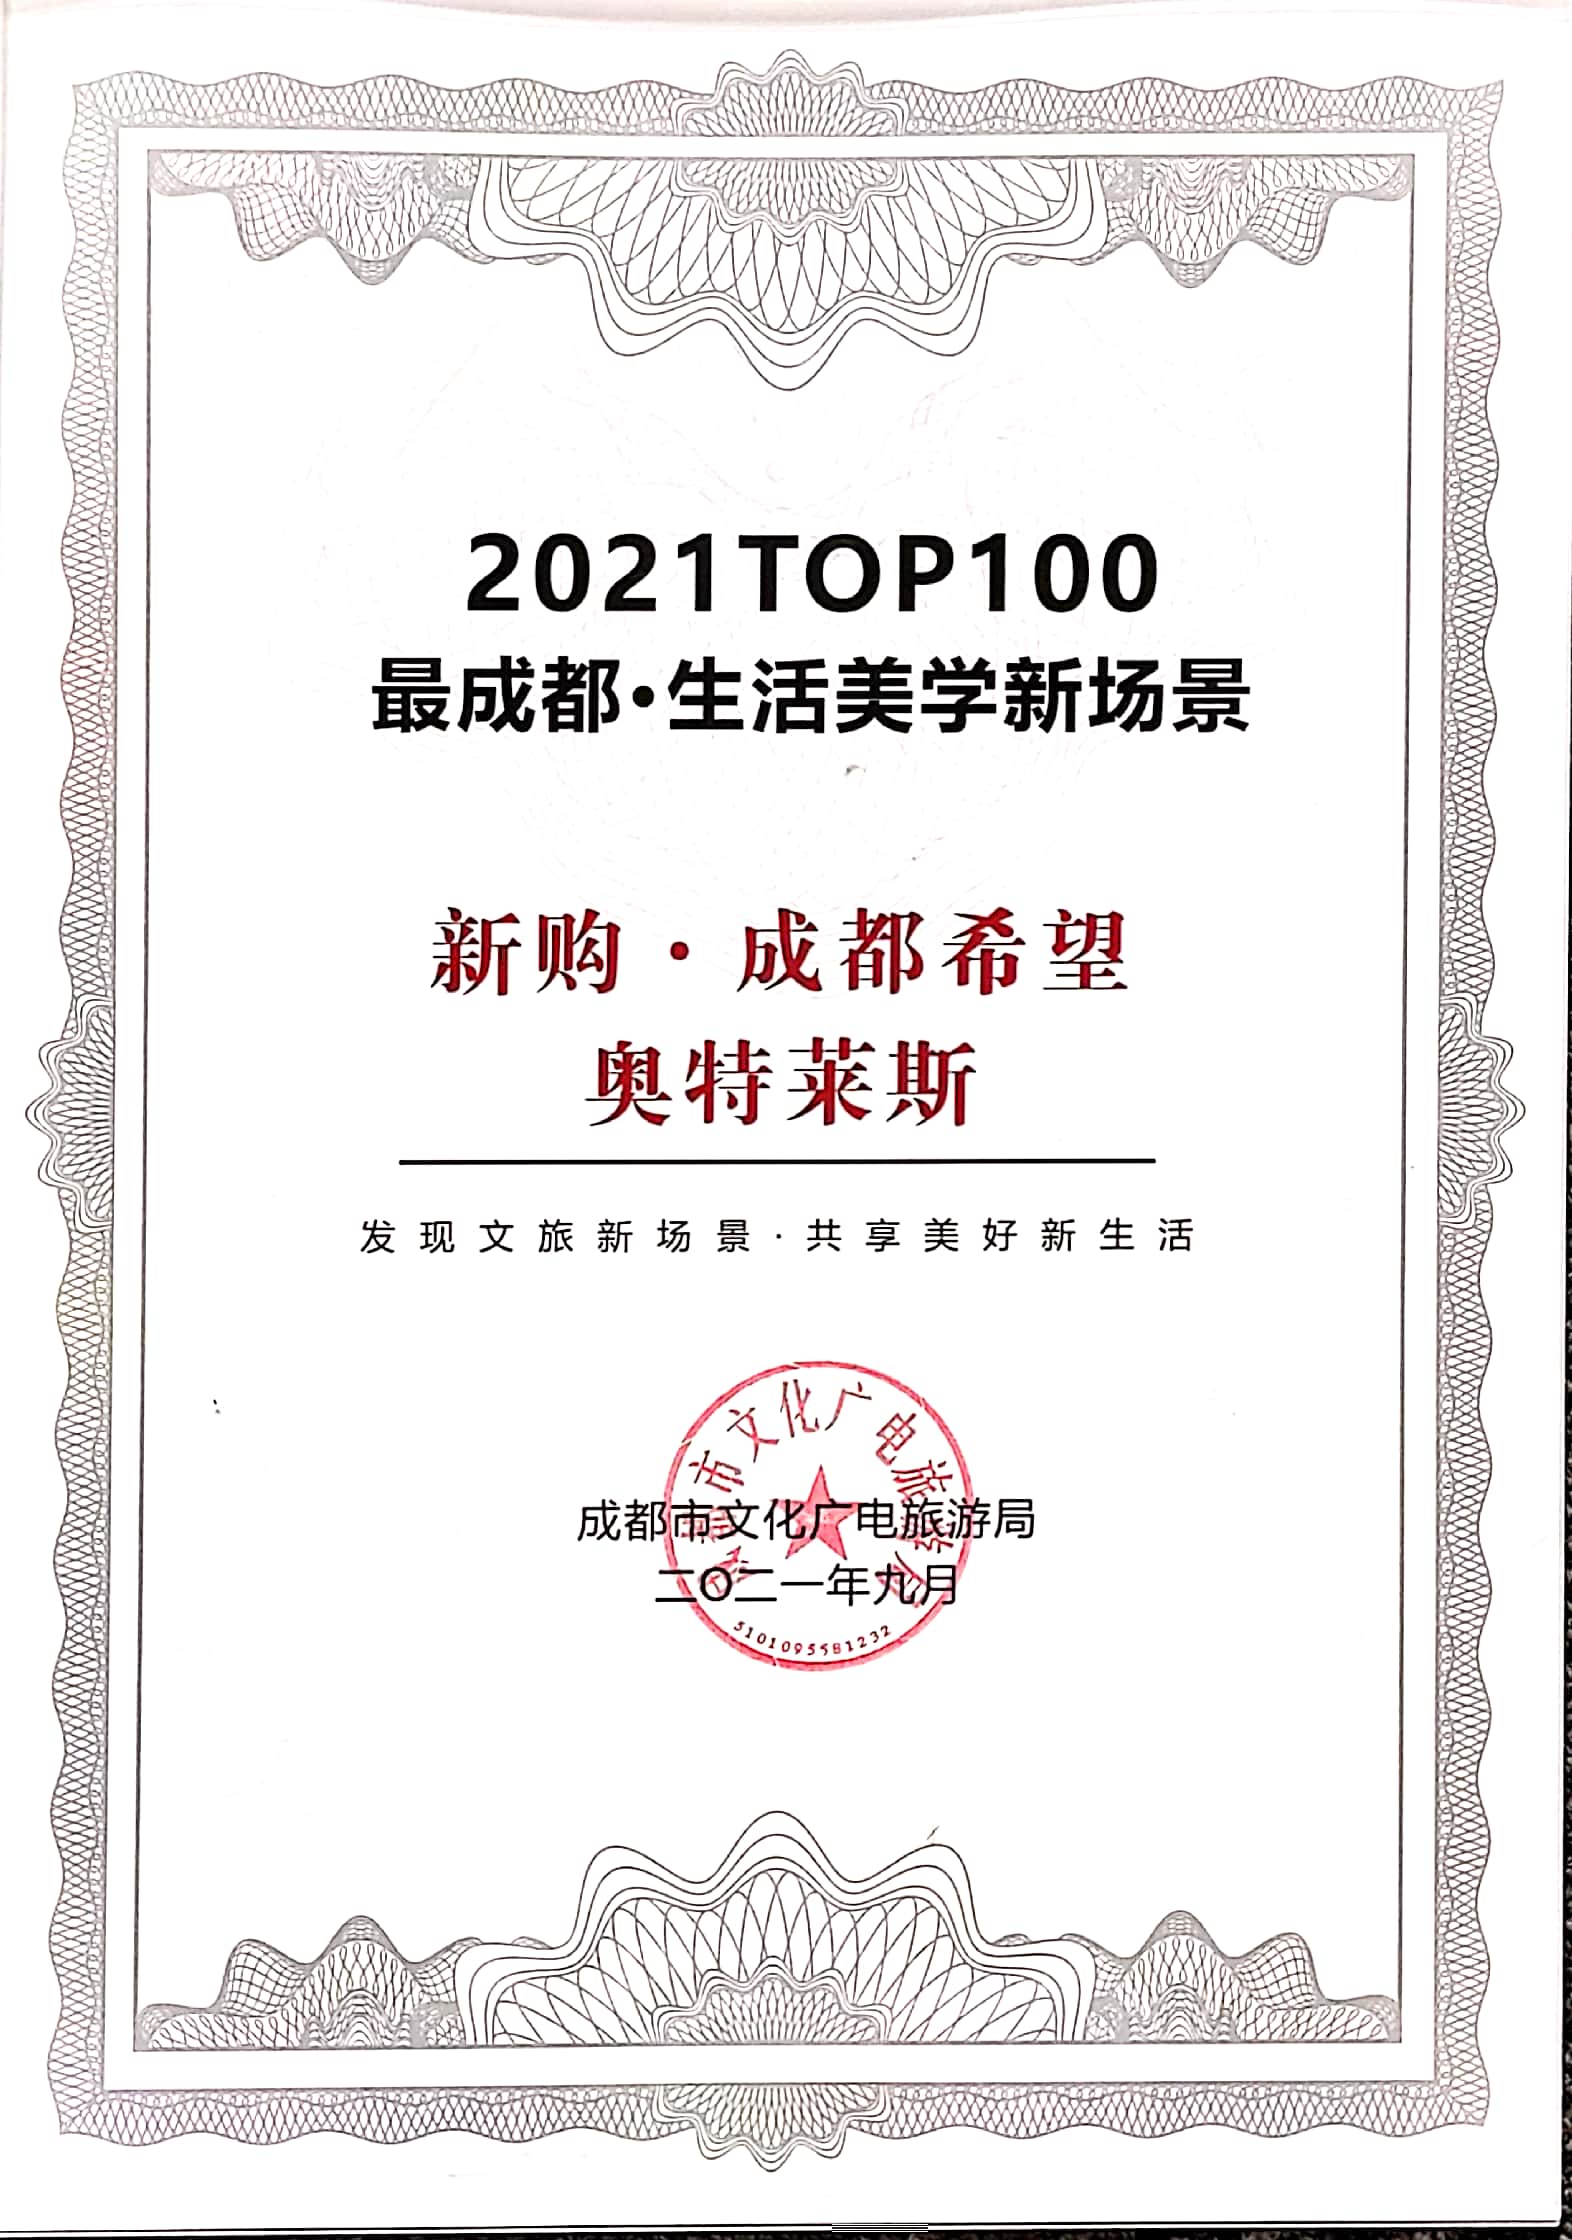 2021T0P100 Most Chengdu - A New Scene of Living Aesthetics - Chengdu Hope Outlets